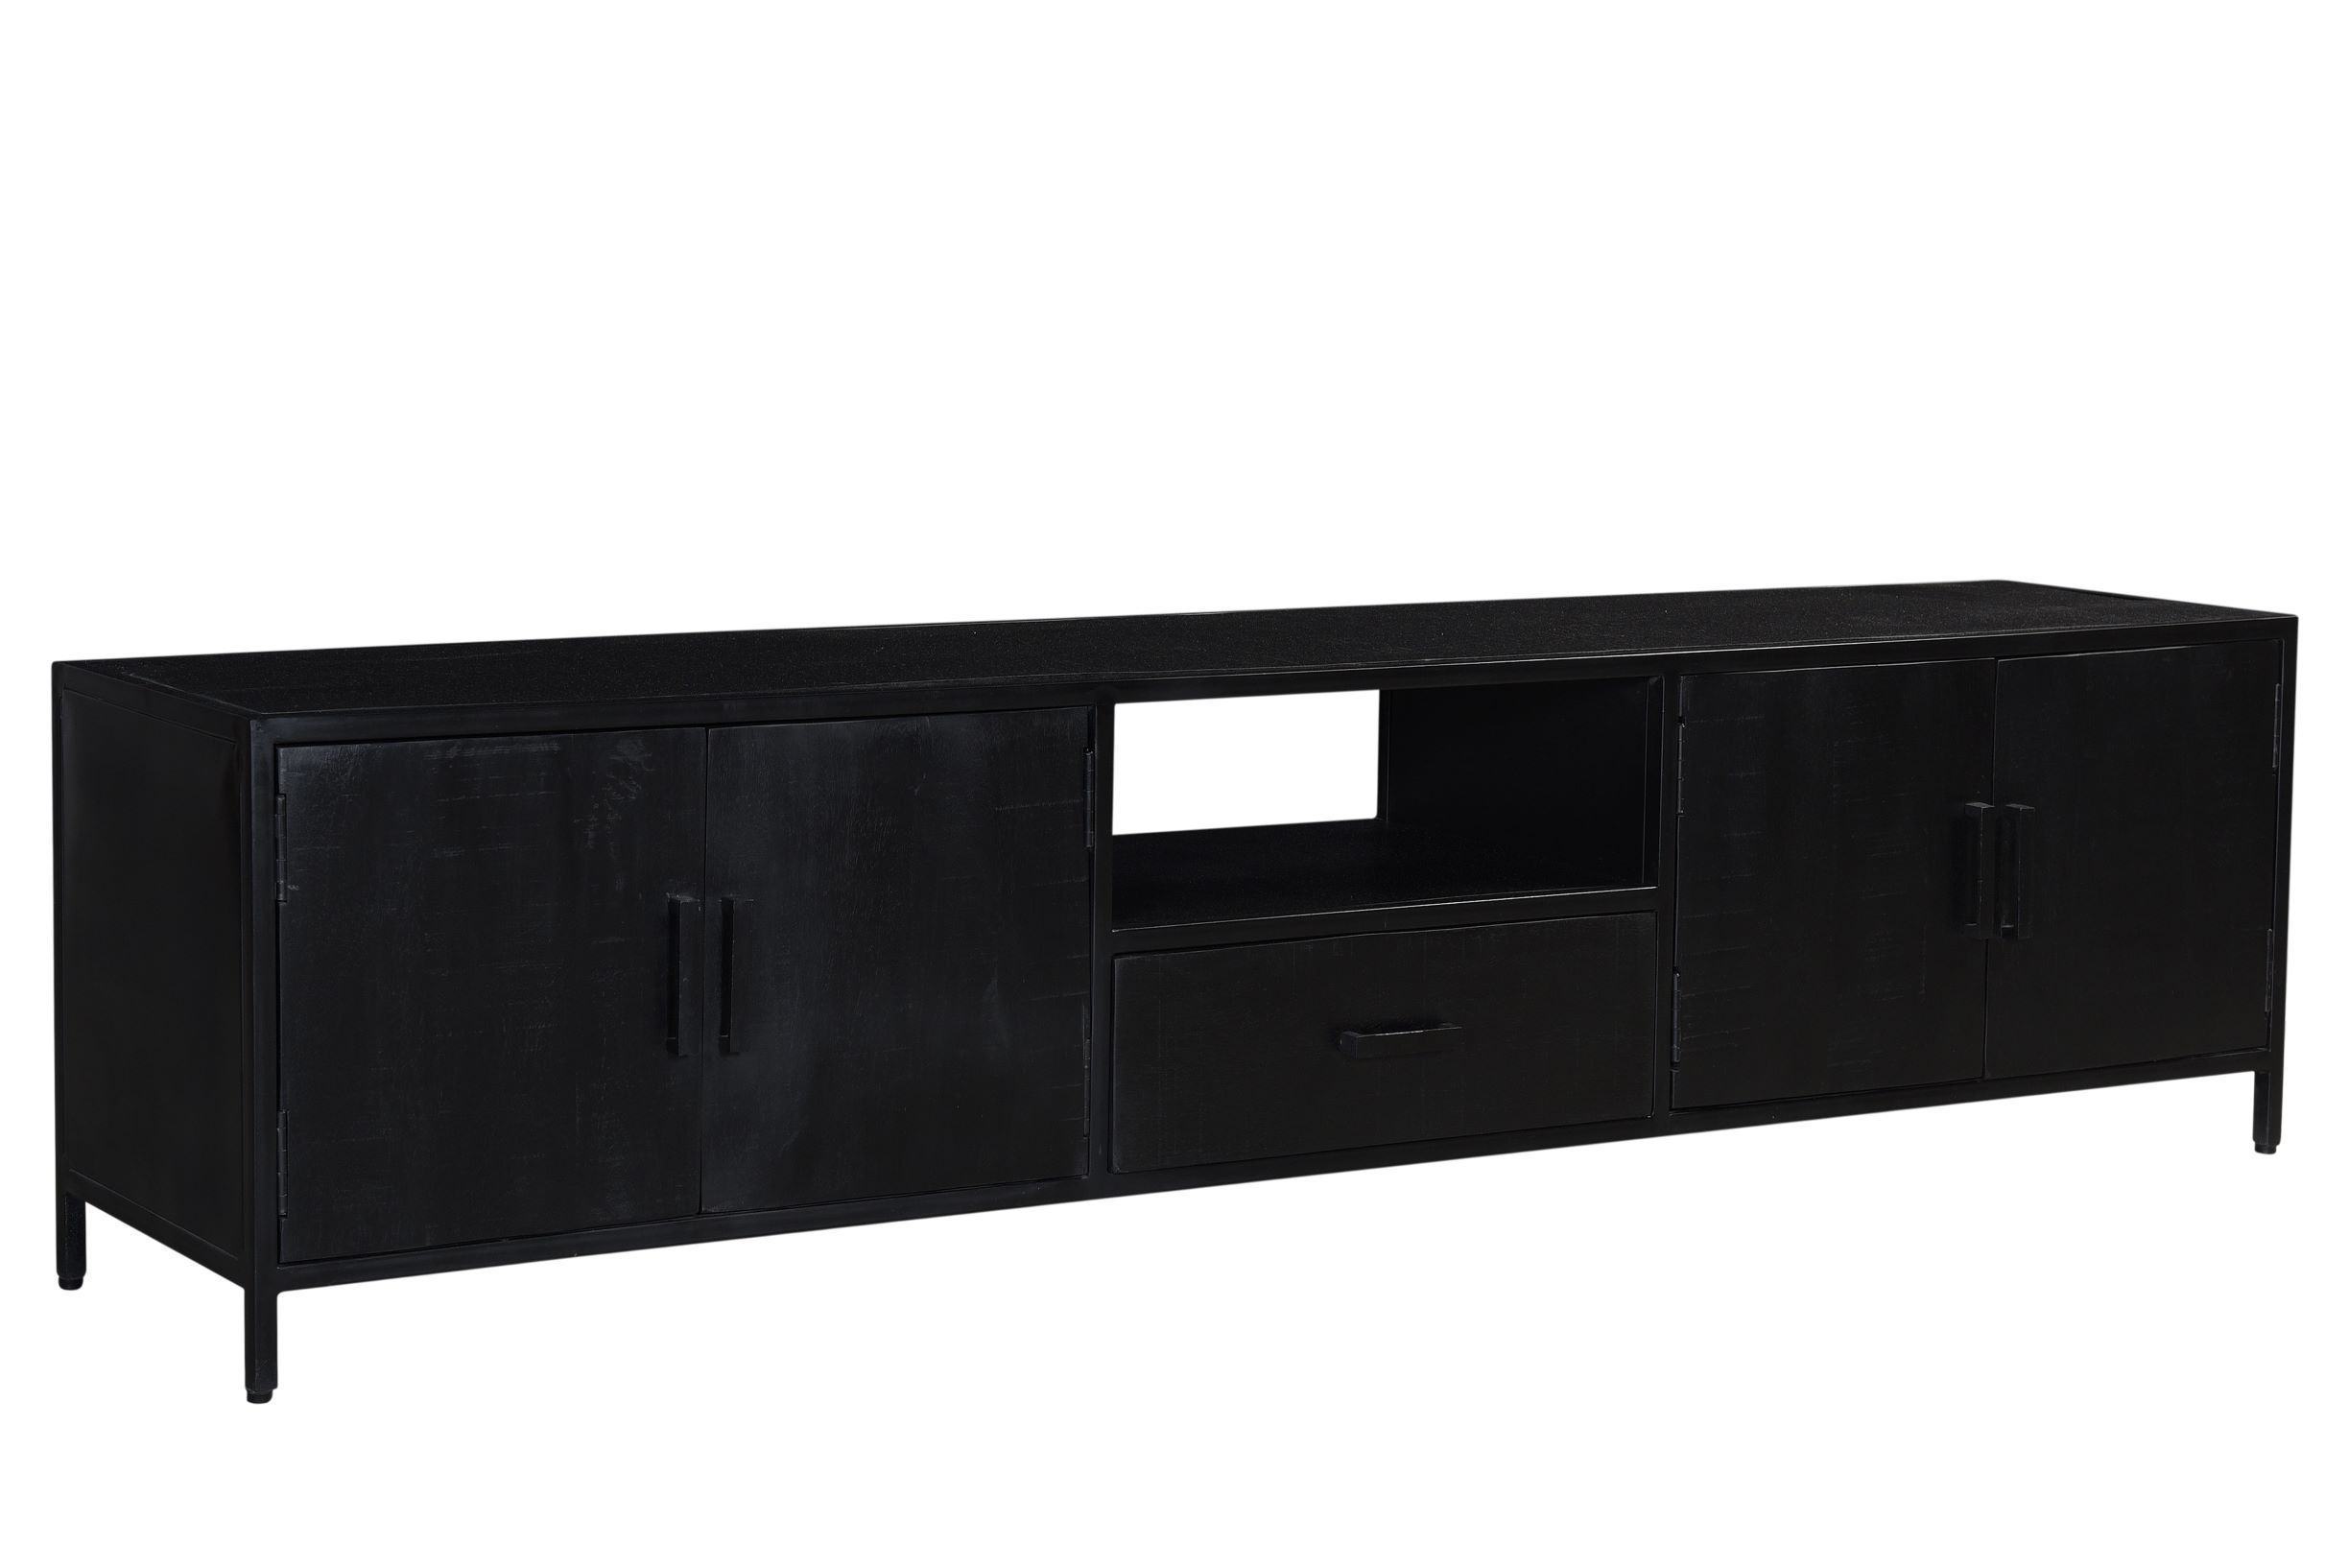 Interpersoonlijk meubilair zitten Kala tv meubel zwart 220 cm | Aktiewonen.nl